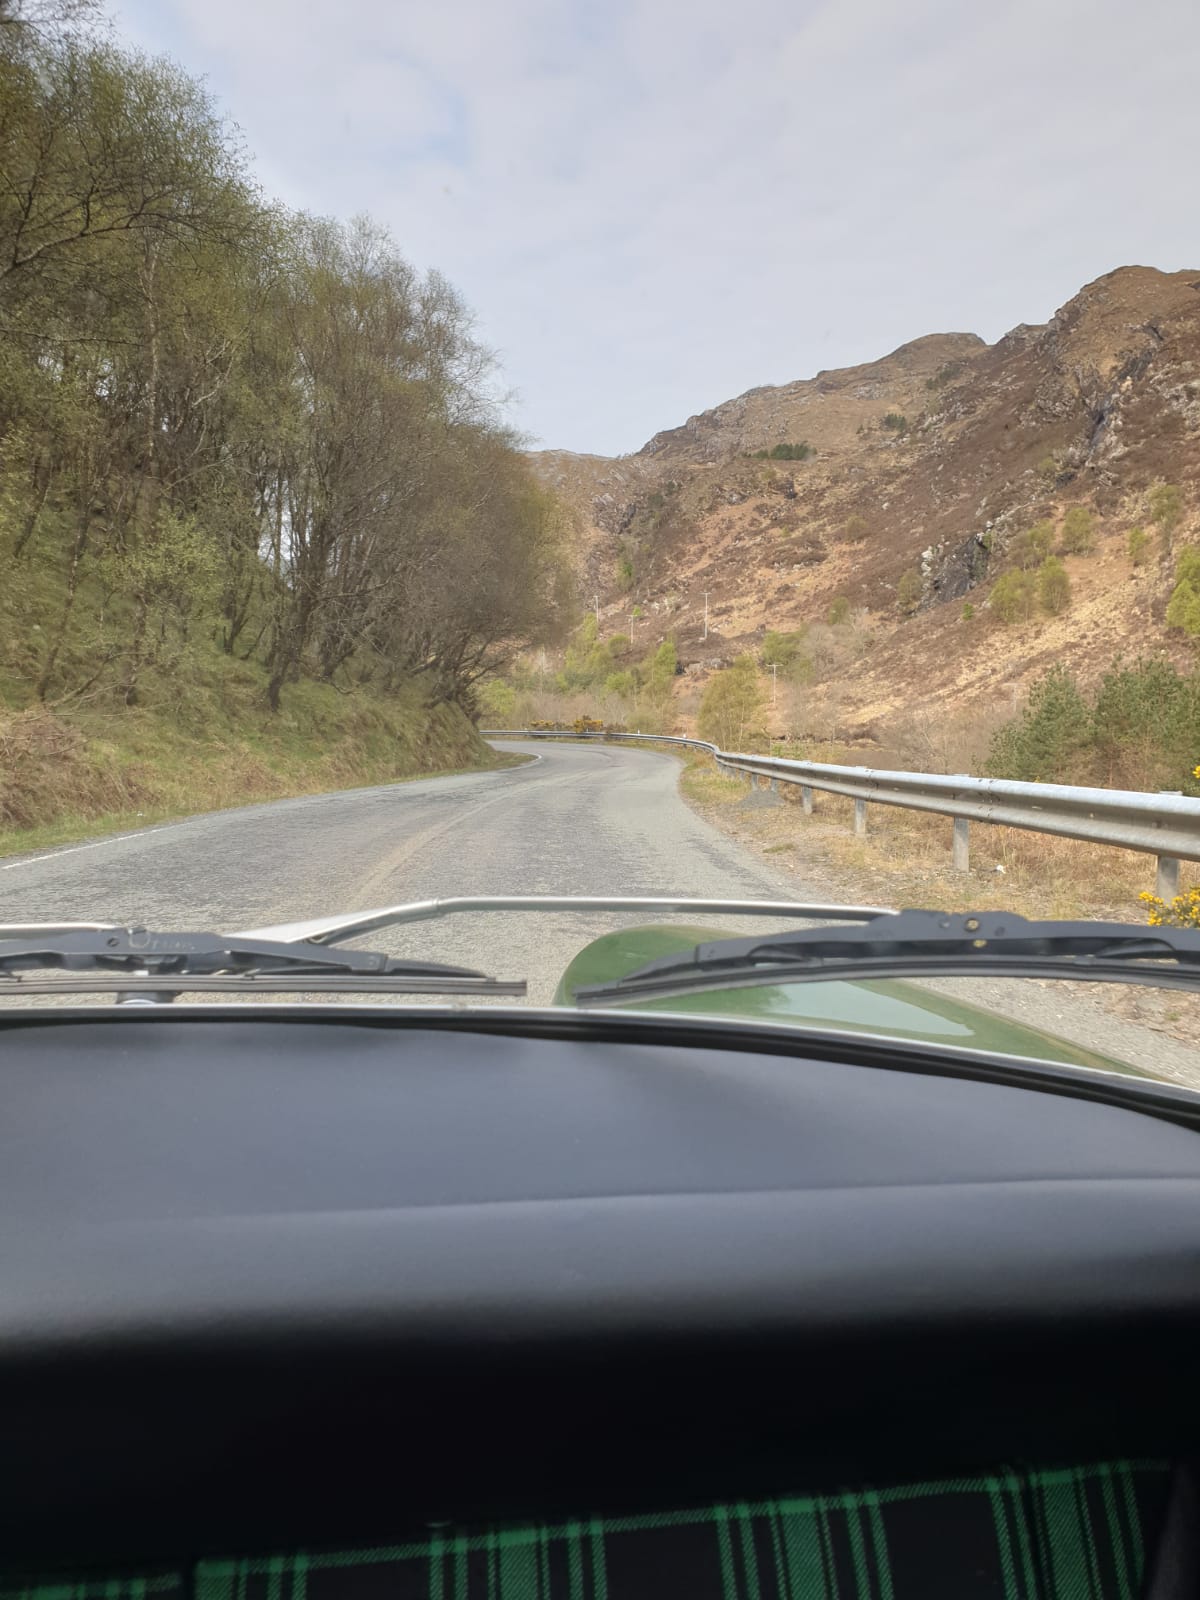 Nigel Allen VW - Driving through Scotland - Cape to cape